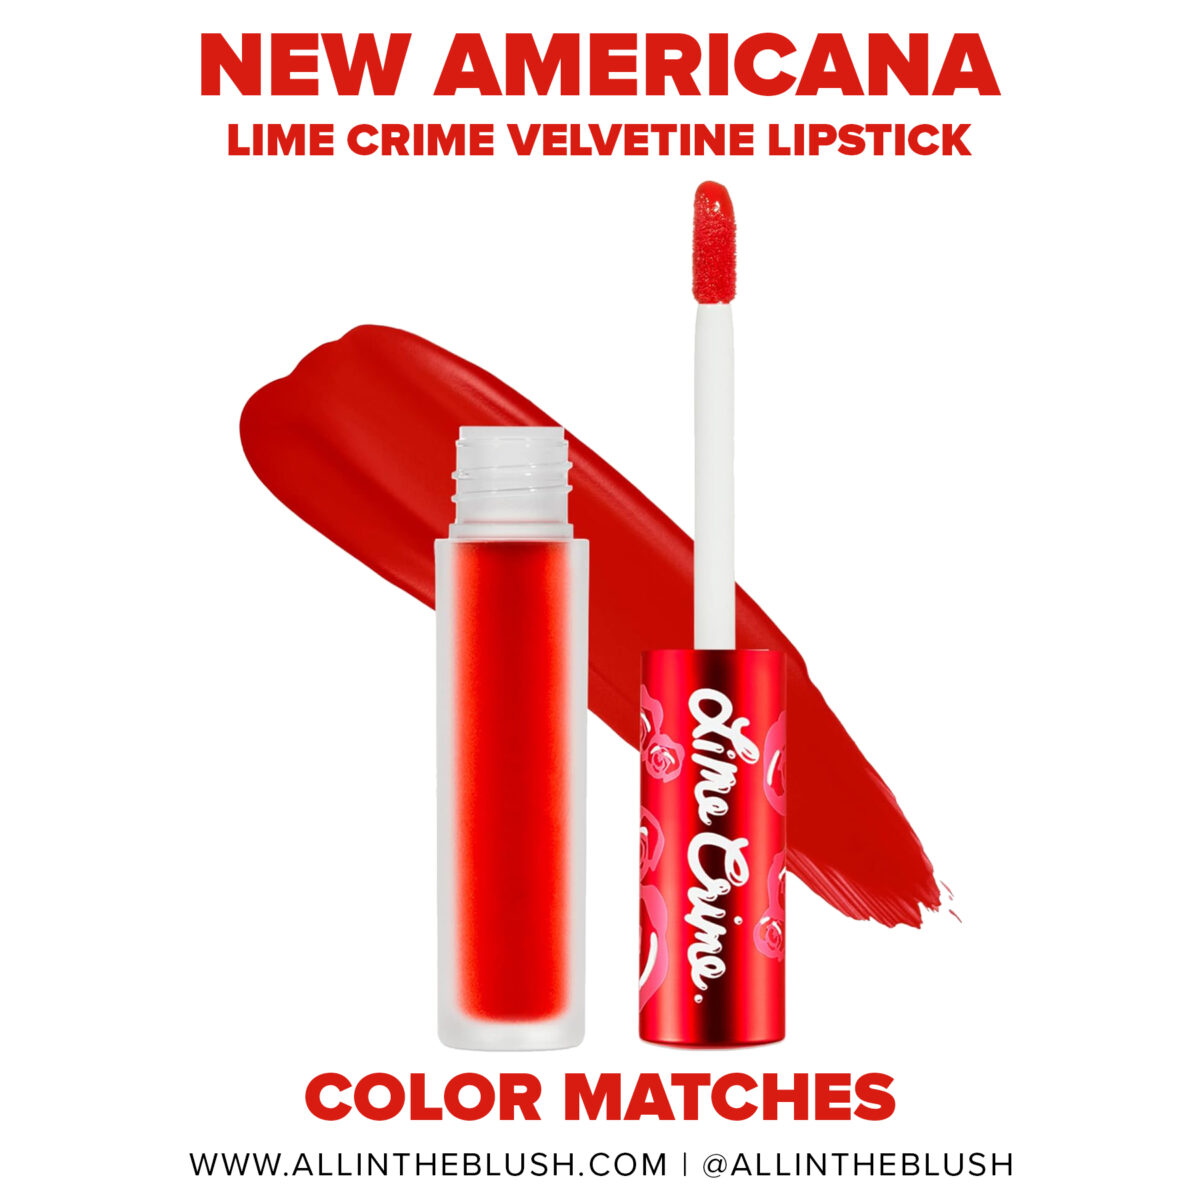 Lime Crime New Americana Velvetine Liquid Lipstick Dupes